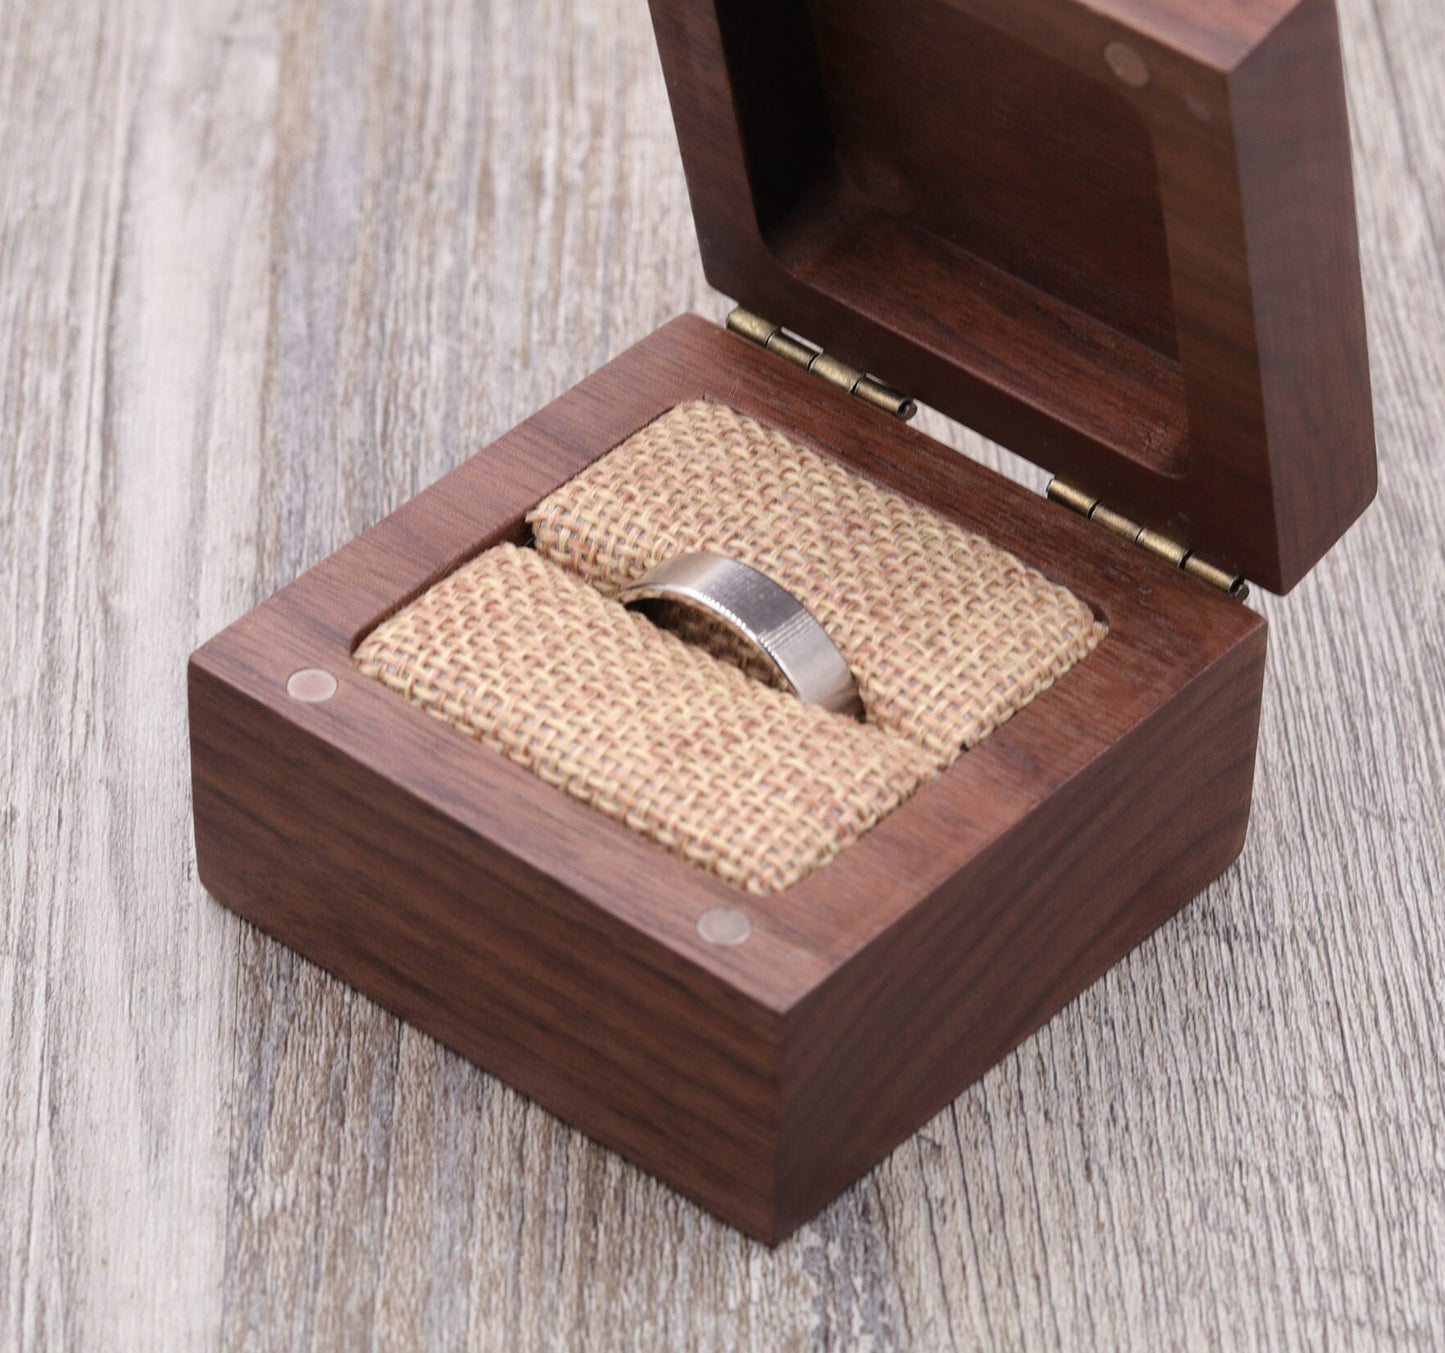 Special Date - Ring Box, Keepsake Box, Jewelry Box